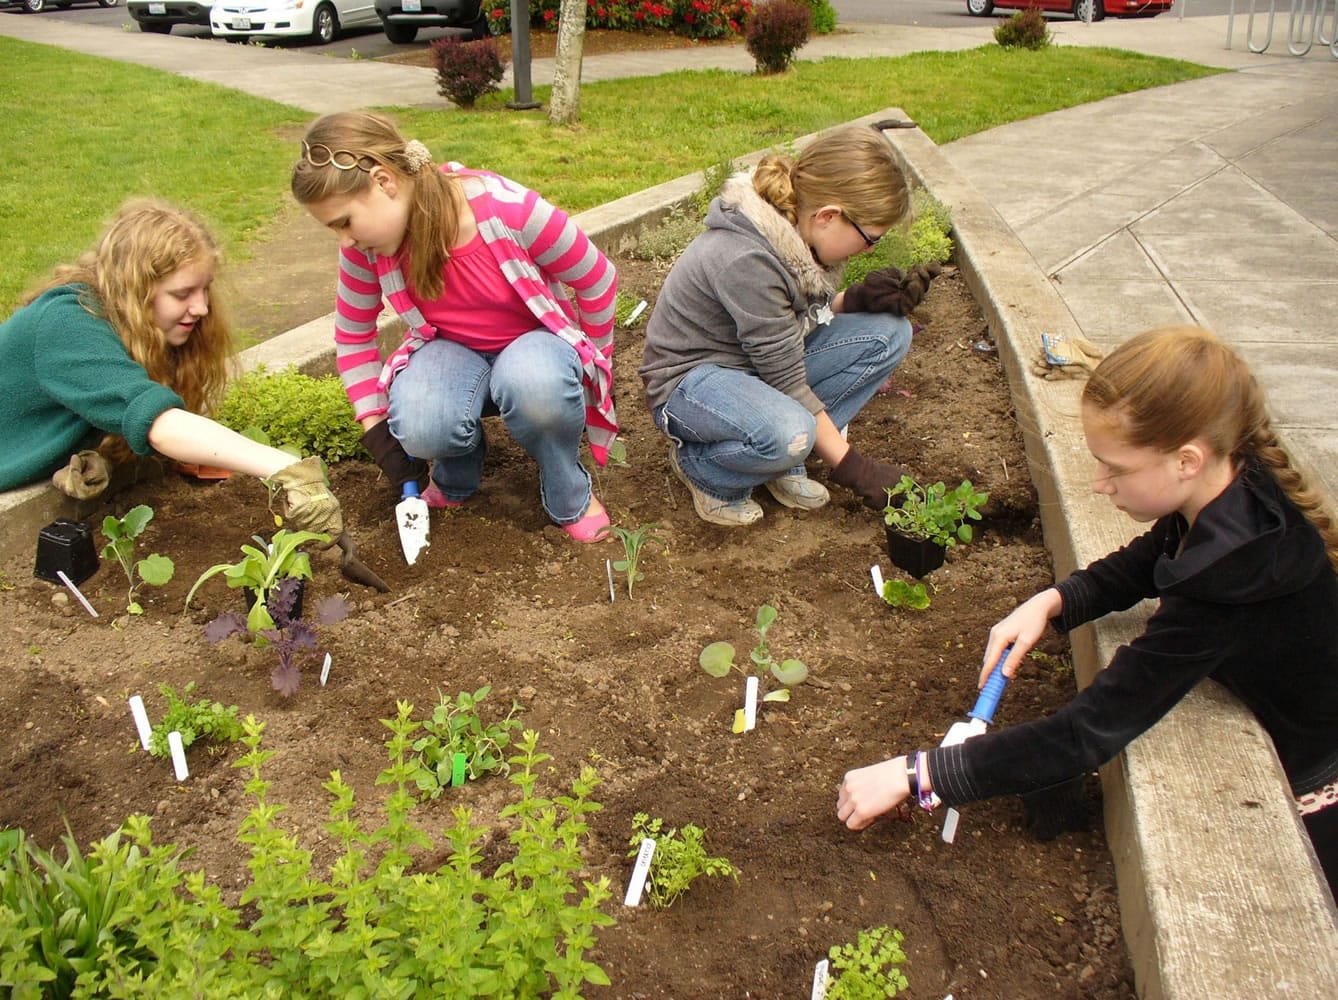 Roosevelt Elementary students, from left, Bonnie McCrady, Veronika Rymar, Mariah Erickson and Svetlana Semenov plant herbs and flowers.